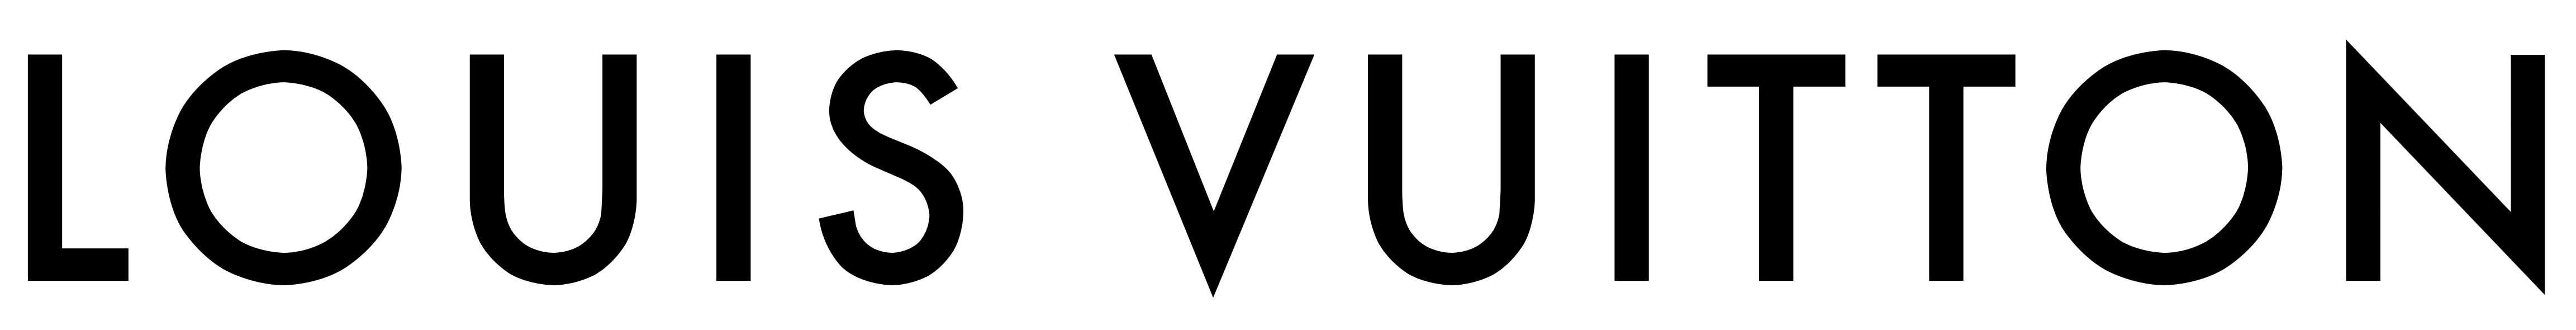 Font logo Louis Vuitton